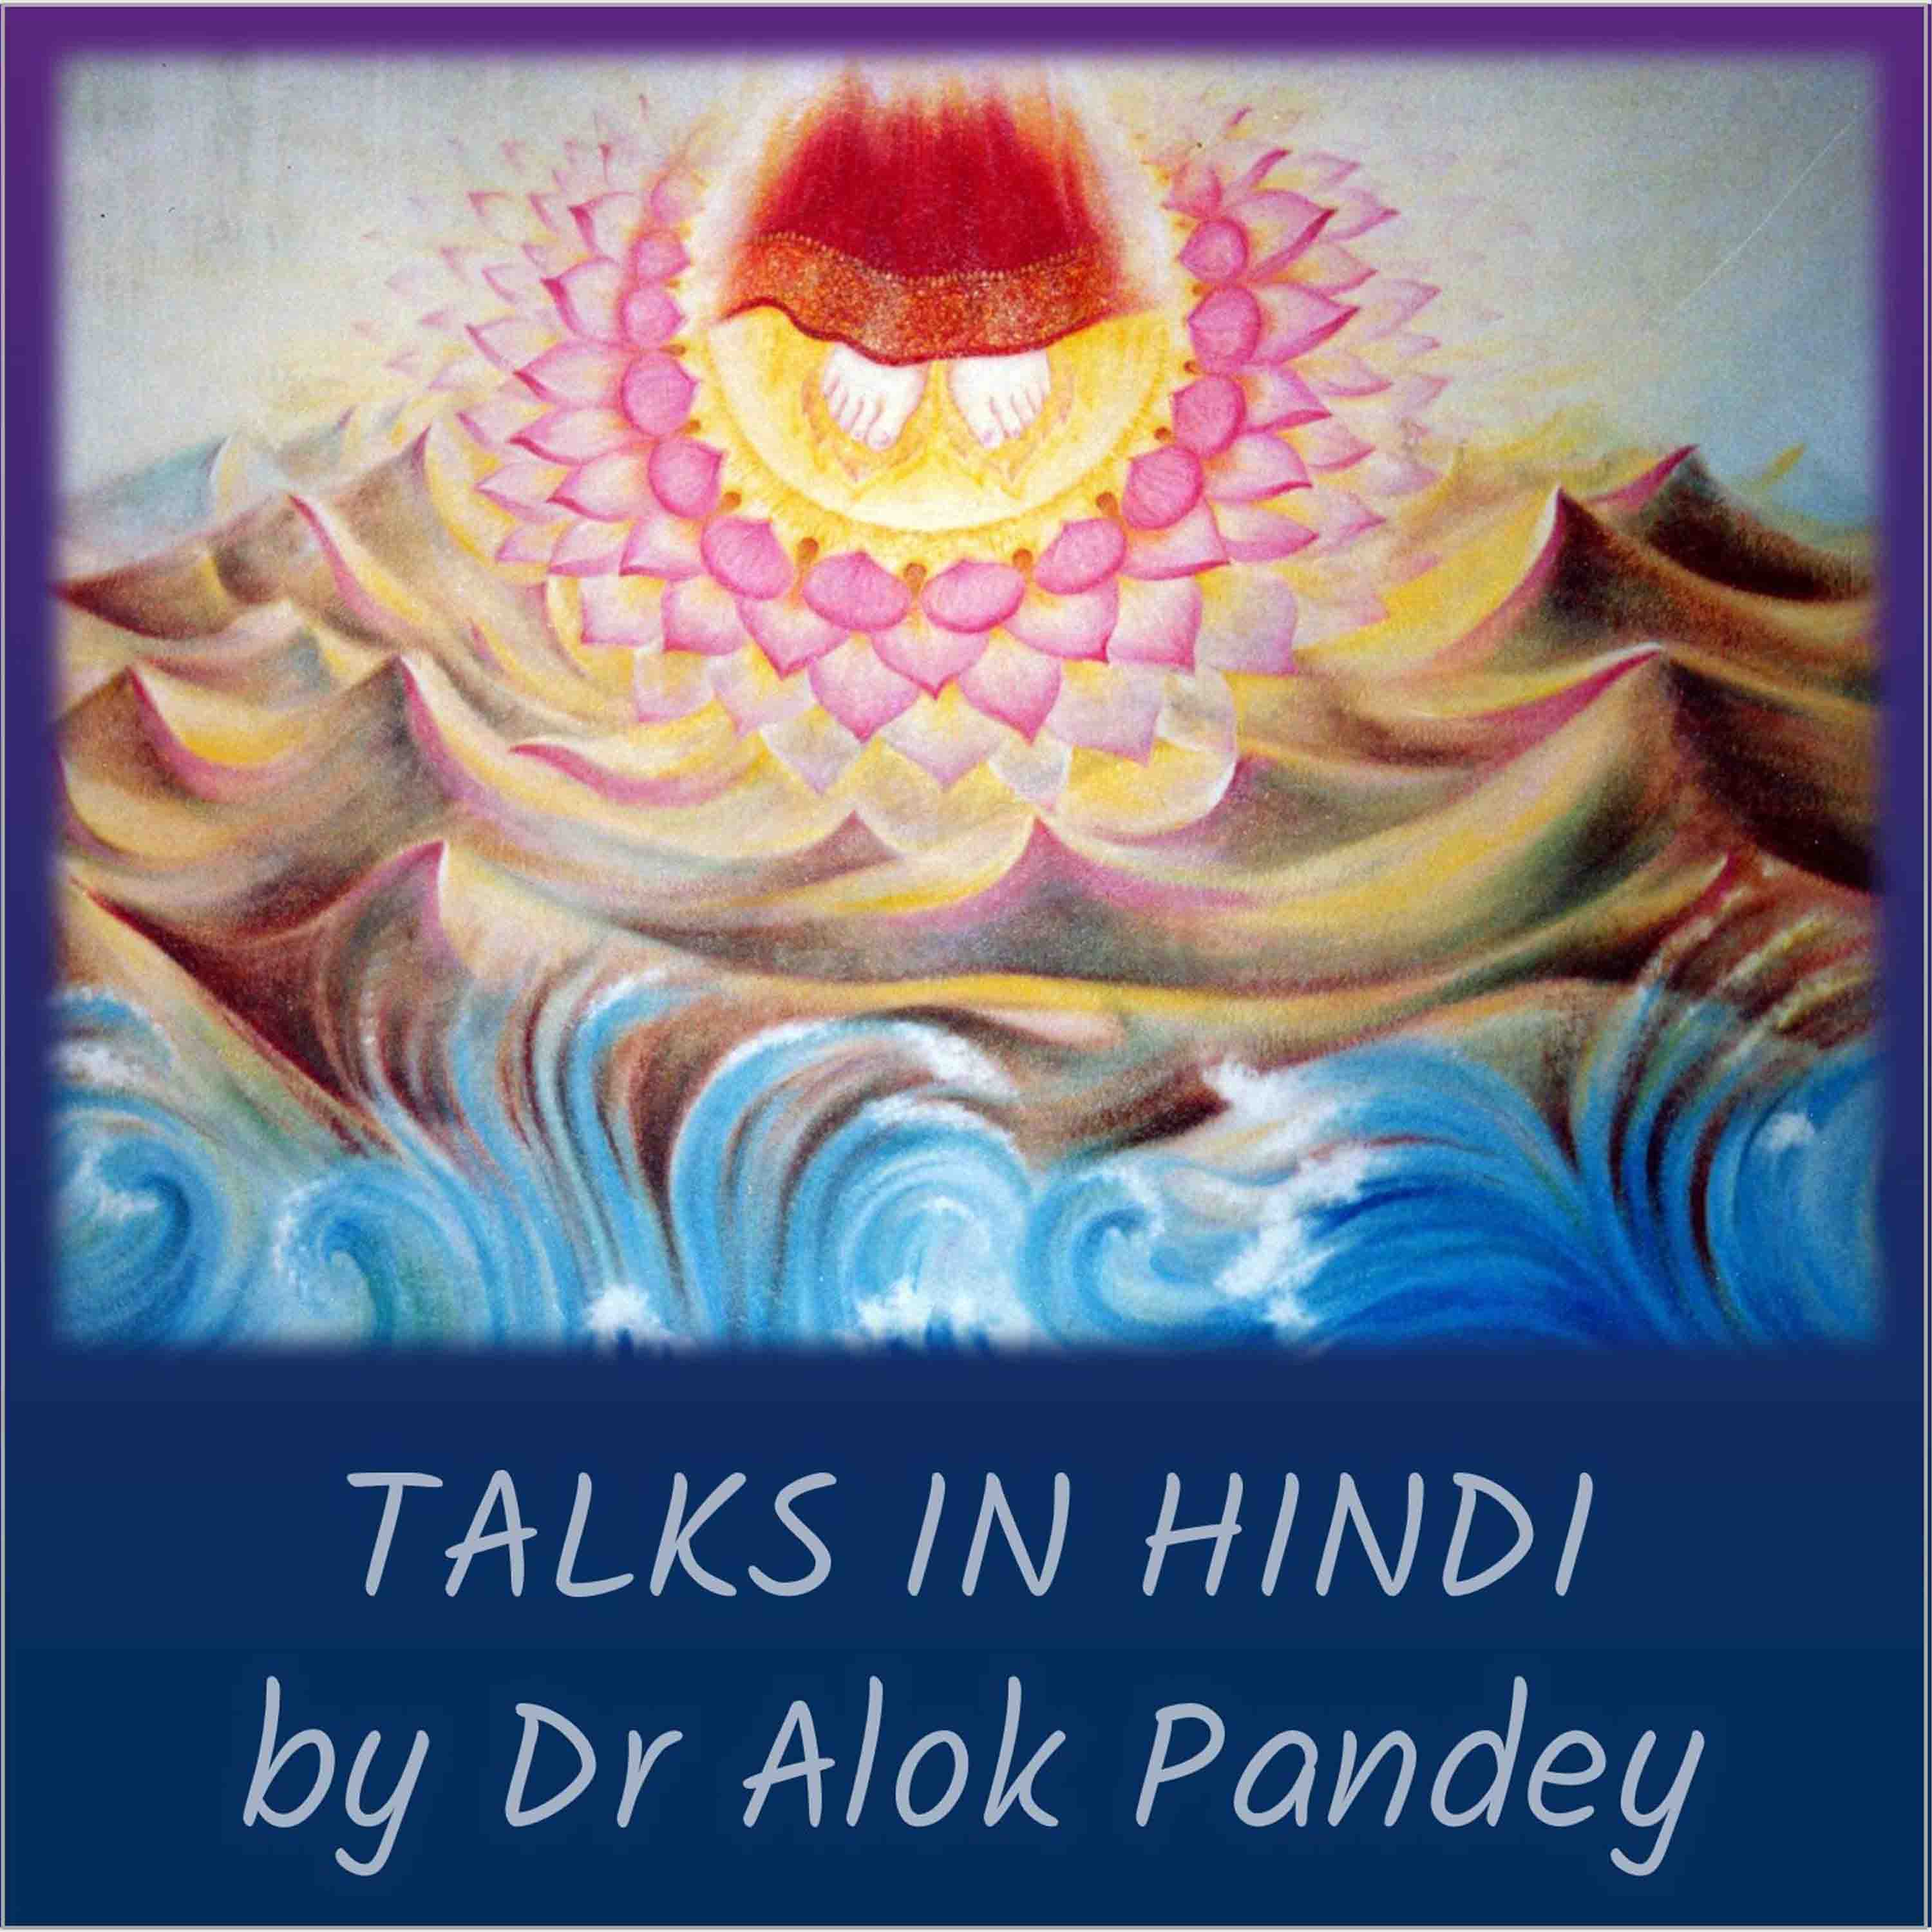 Talks in Hindi